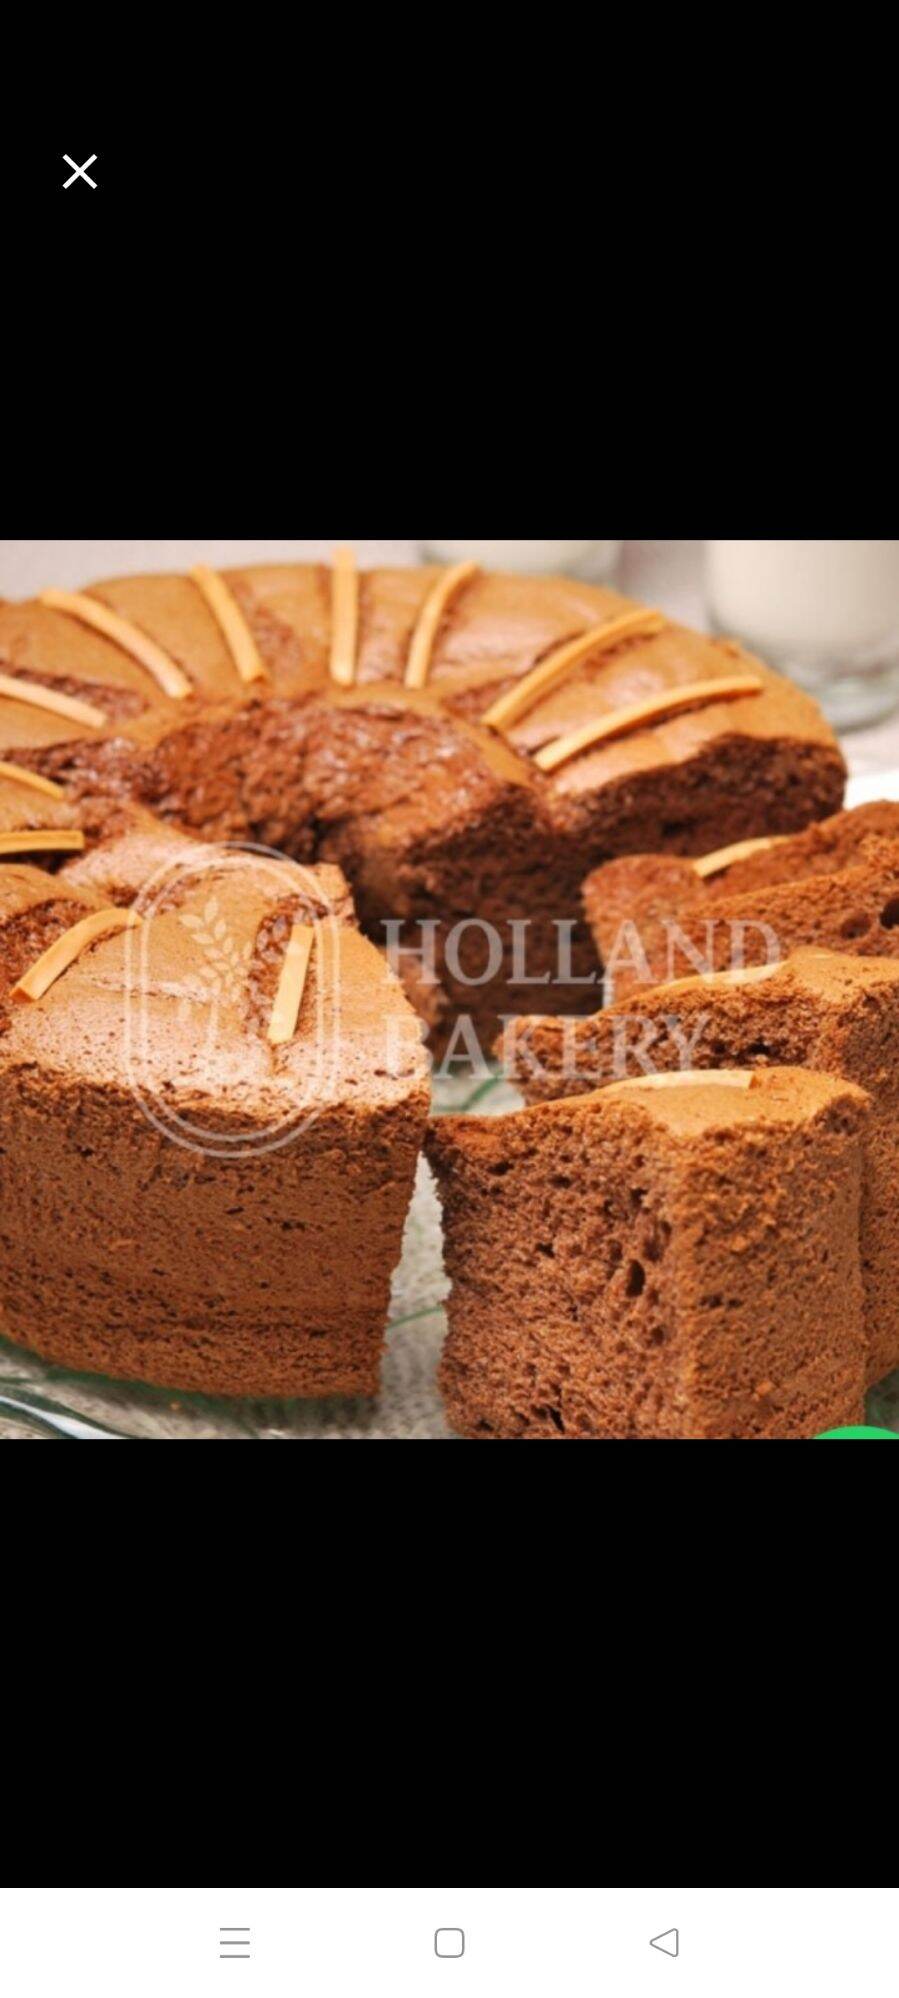 Jual Holland Bakery Cake Terbaru Lazada Co Id